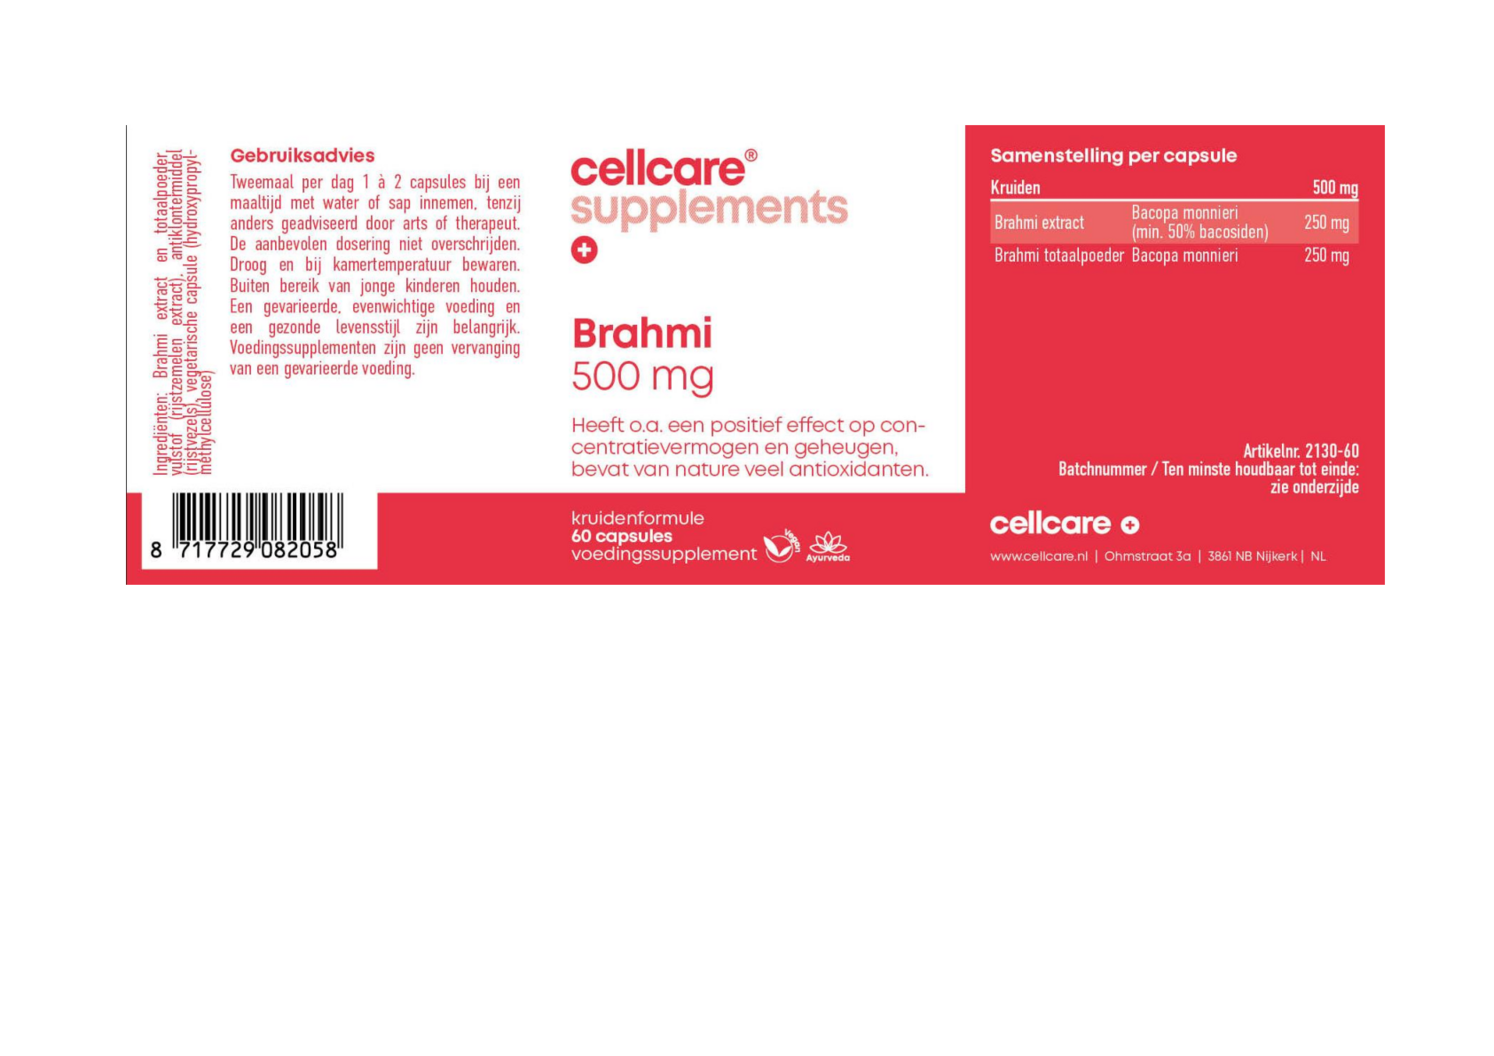 Brahmi Capsules afbeelding van document #1, etiket